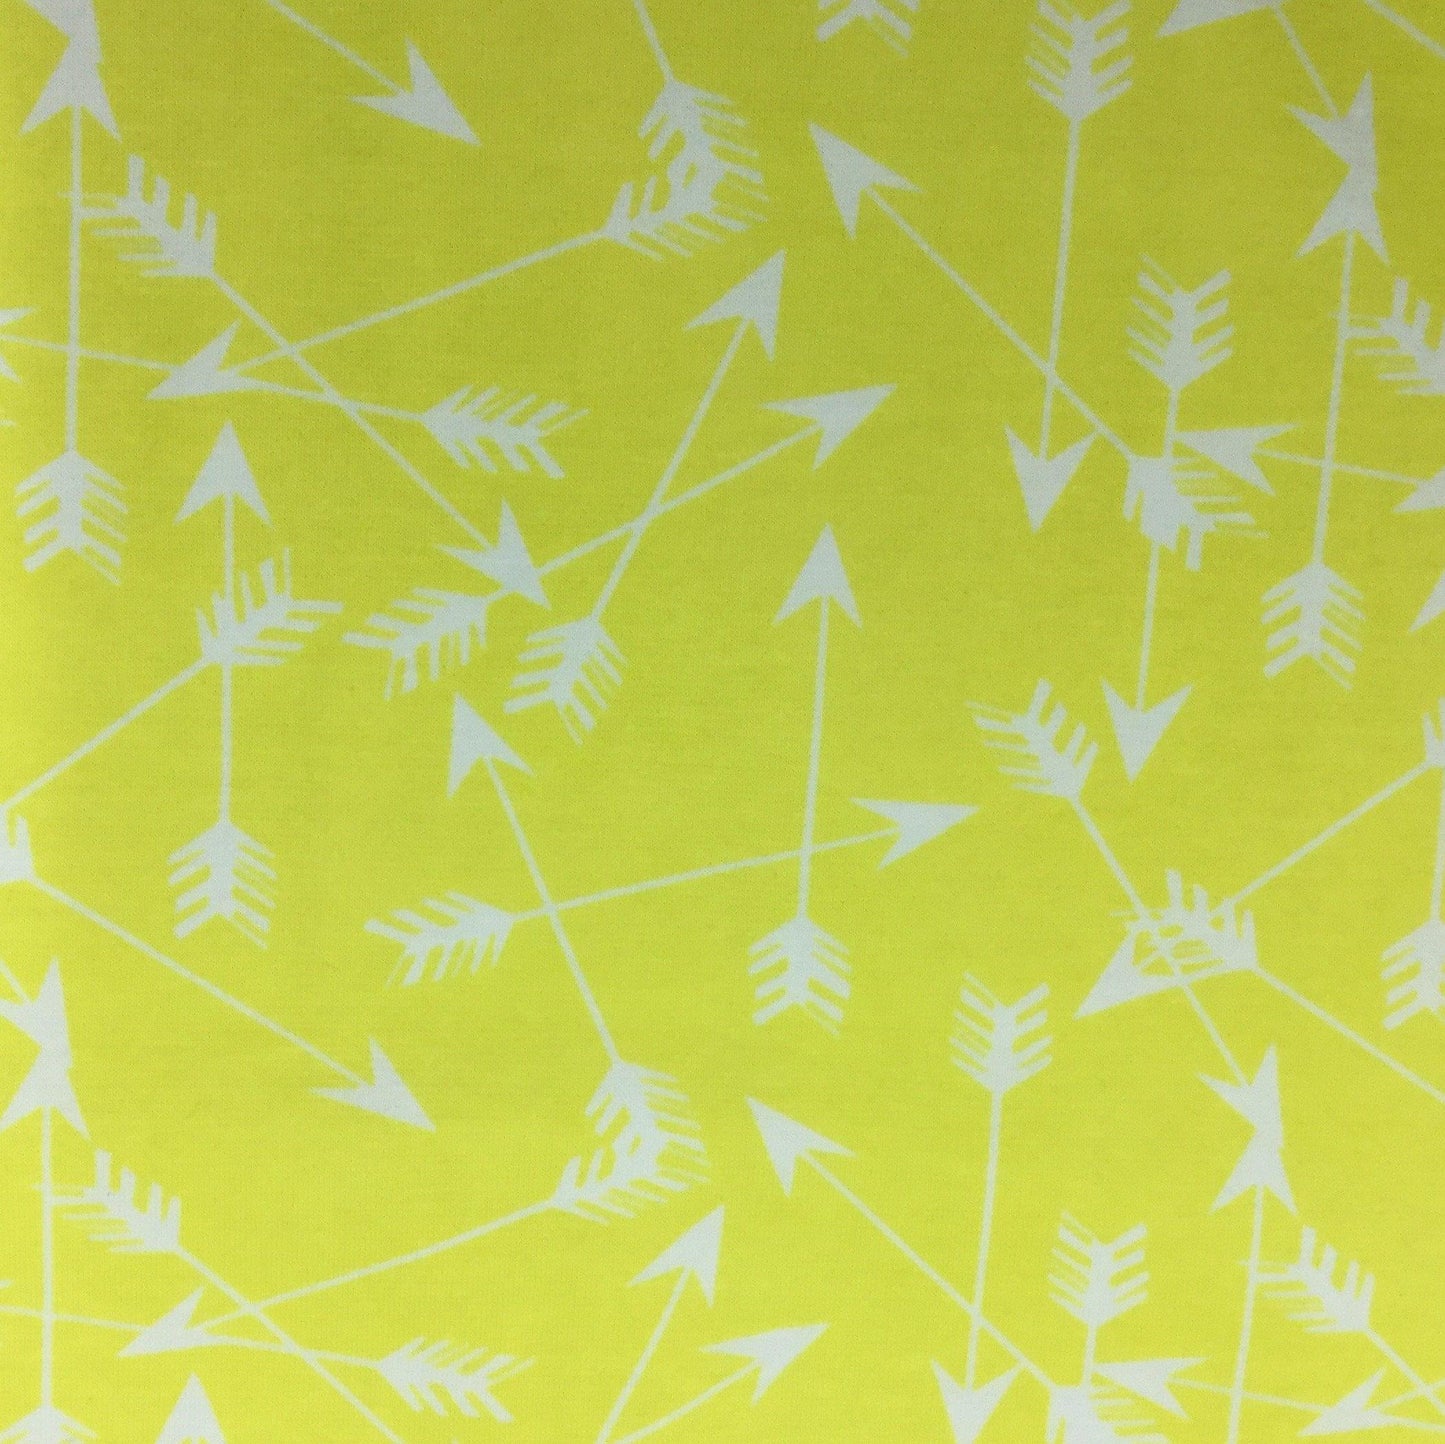 Arrows on Yellow Organic Cotton/Spandex Jersey Fabric - Nature's Fabrics